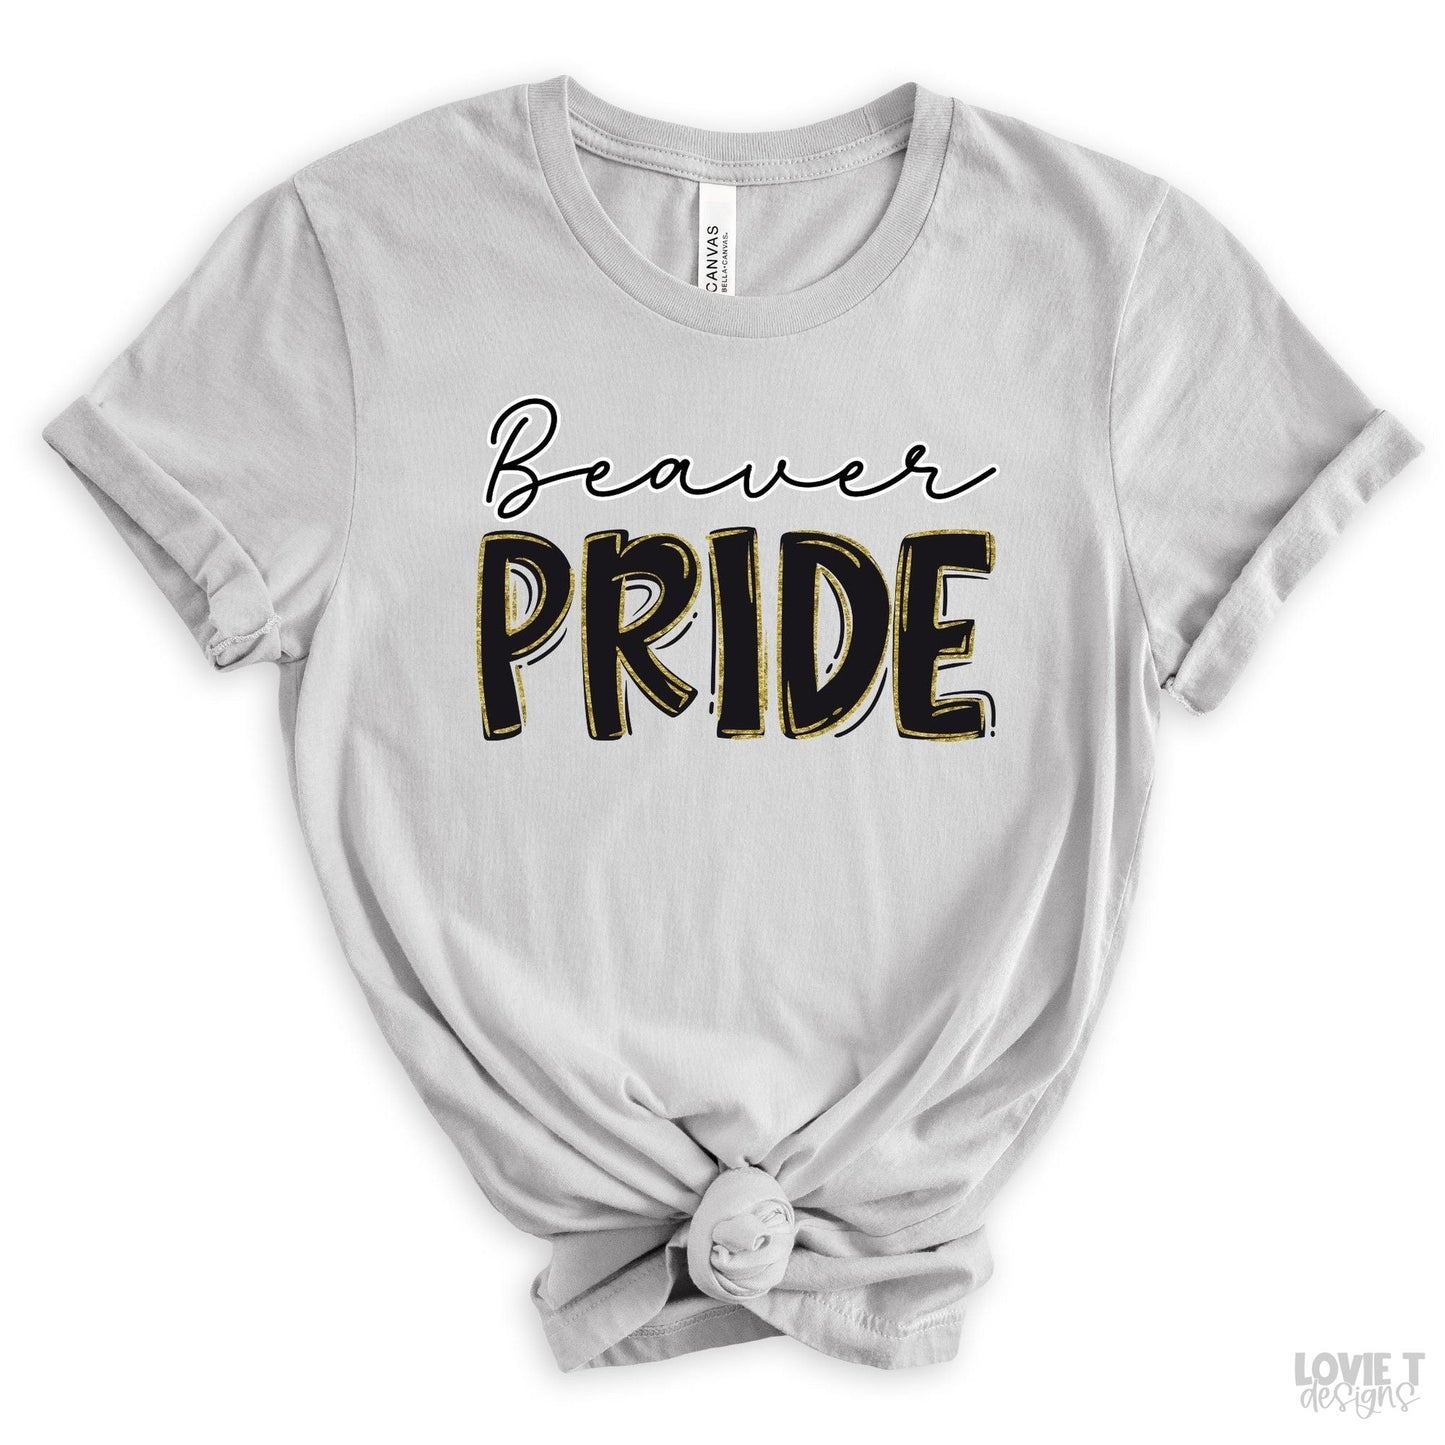 Beaver Pride Black and Gold 4472